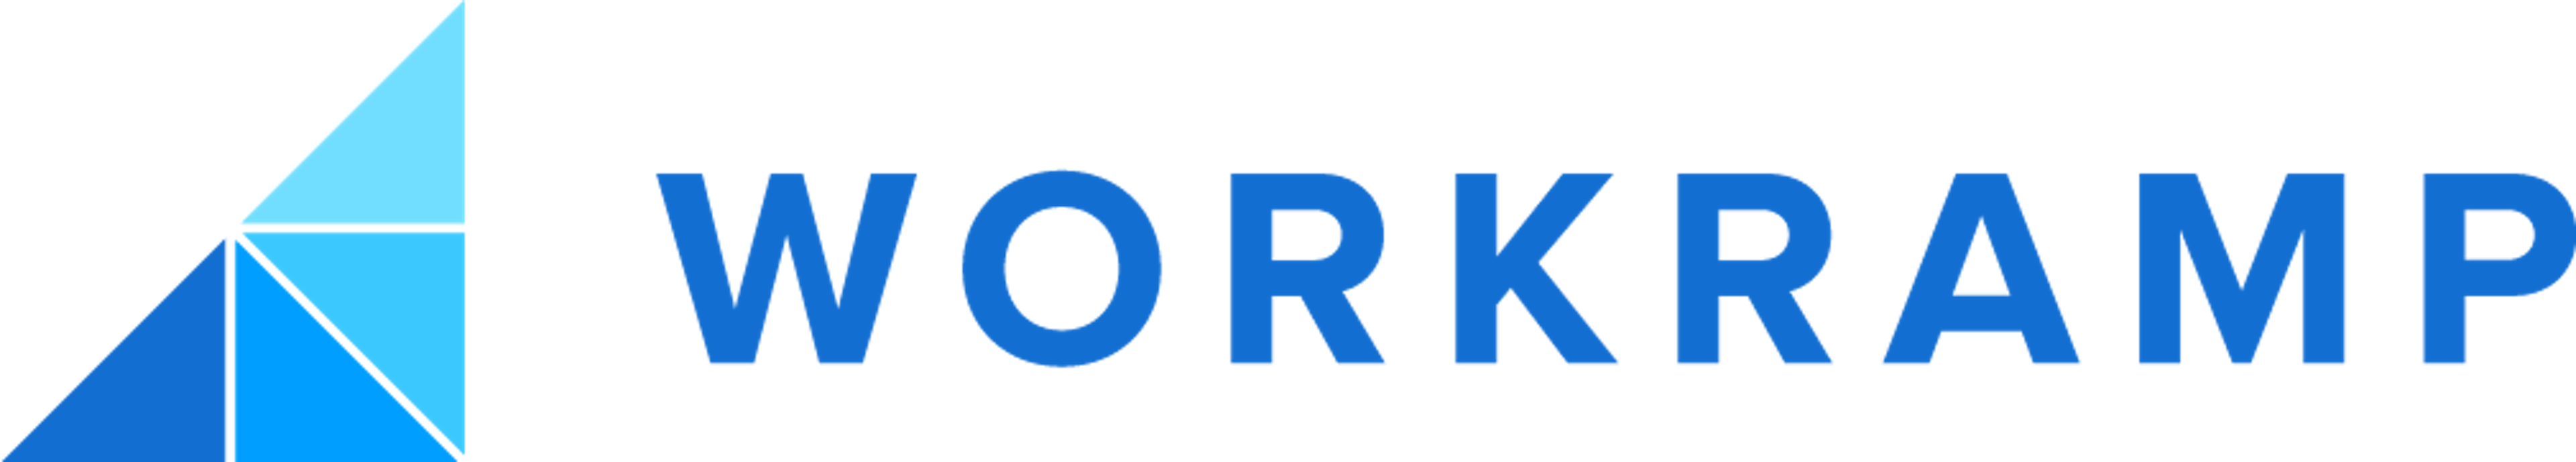 WorkRamp Logo